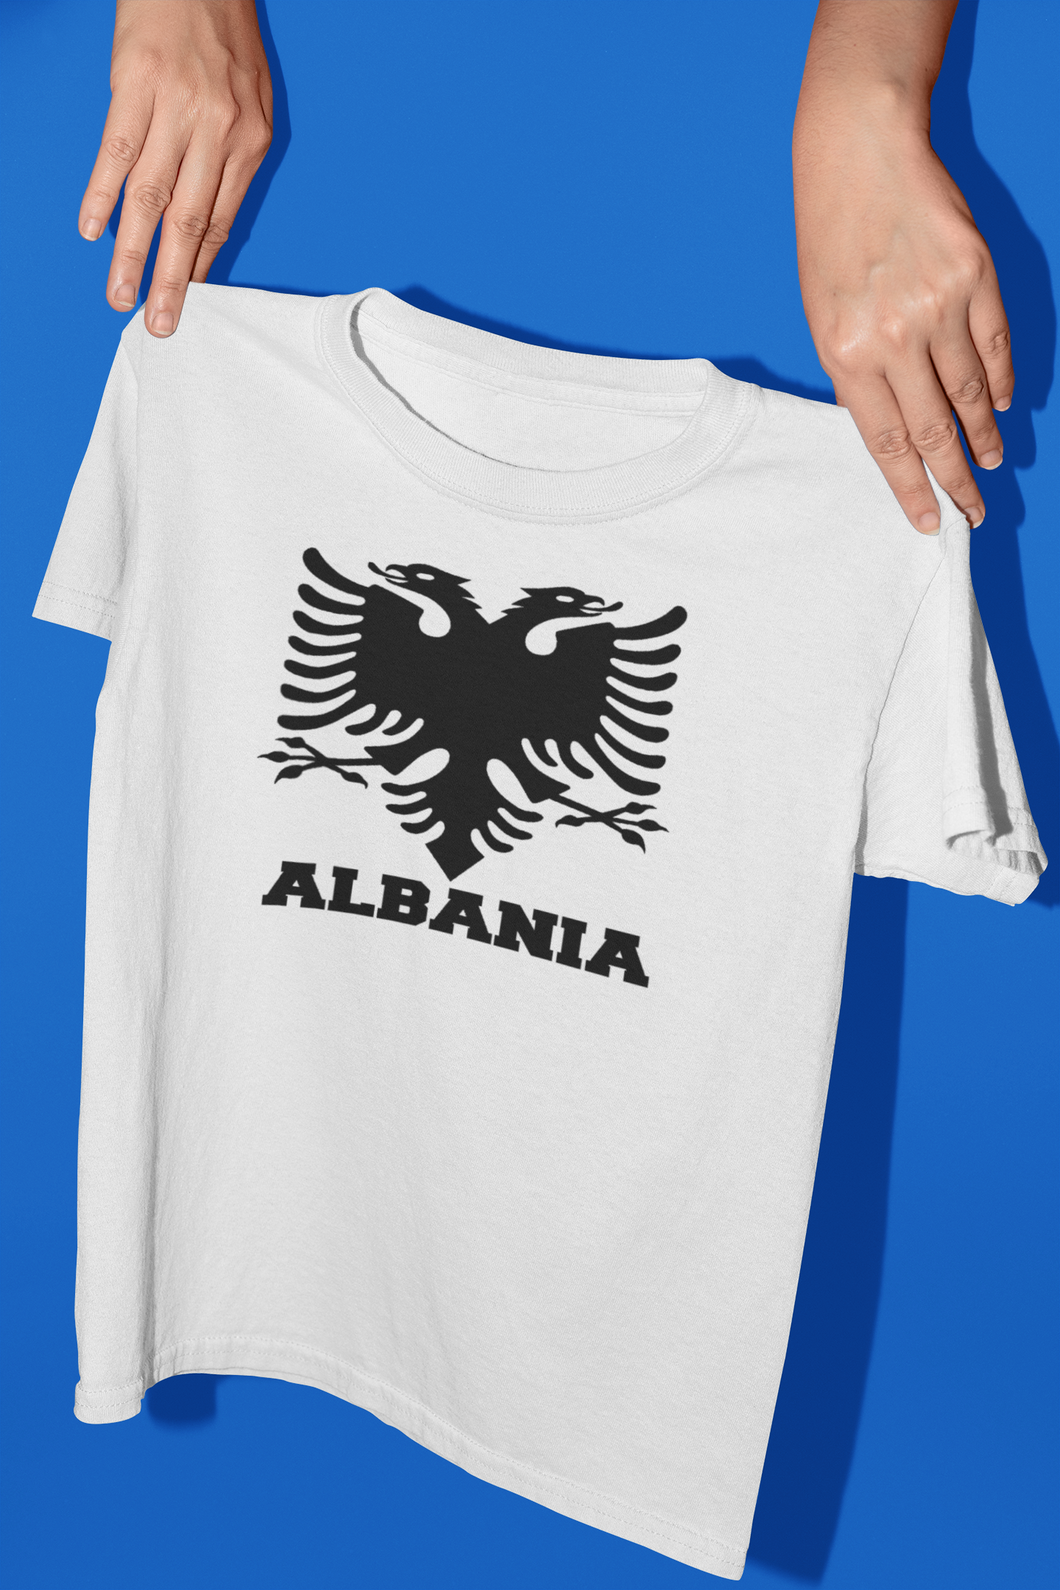 Albanian eagle with Albania text on the bottom ( Man T-shirt )